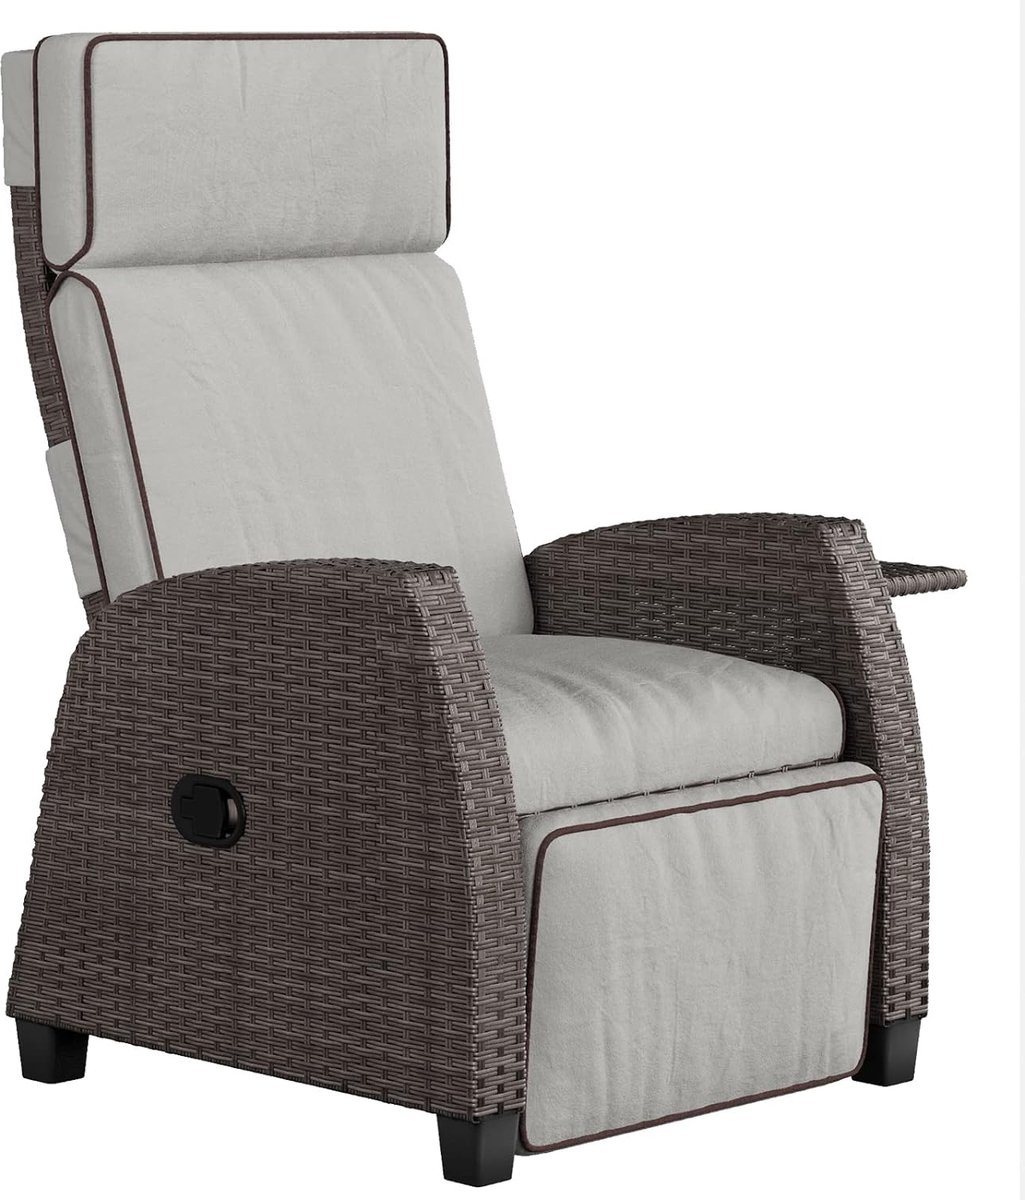 Grand patio Ergonomic Wicker Lounger with Cushion, Side Wall UVFade/Water/Sweatshirt/Rust (Grey Rattan)